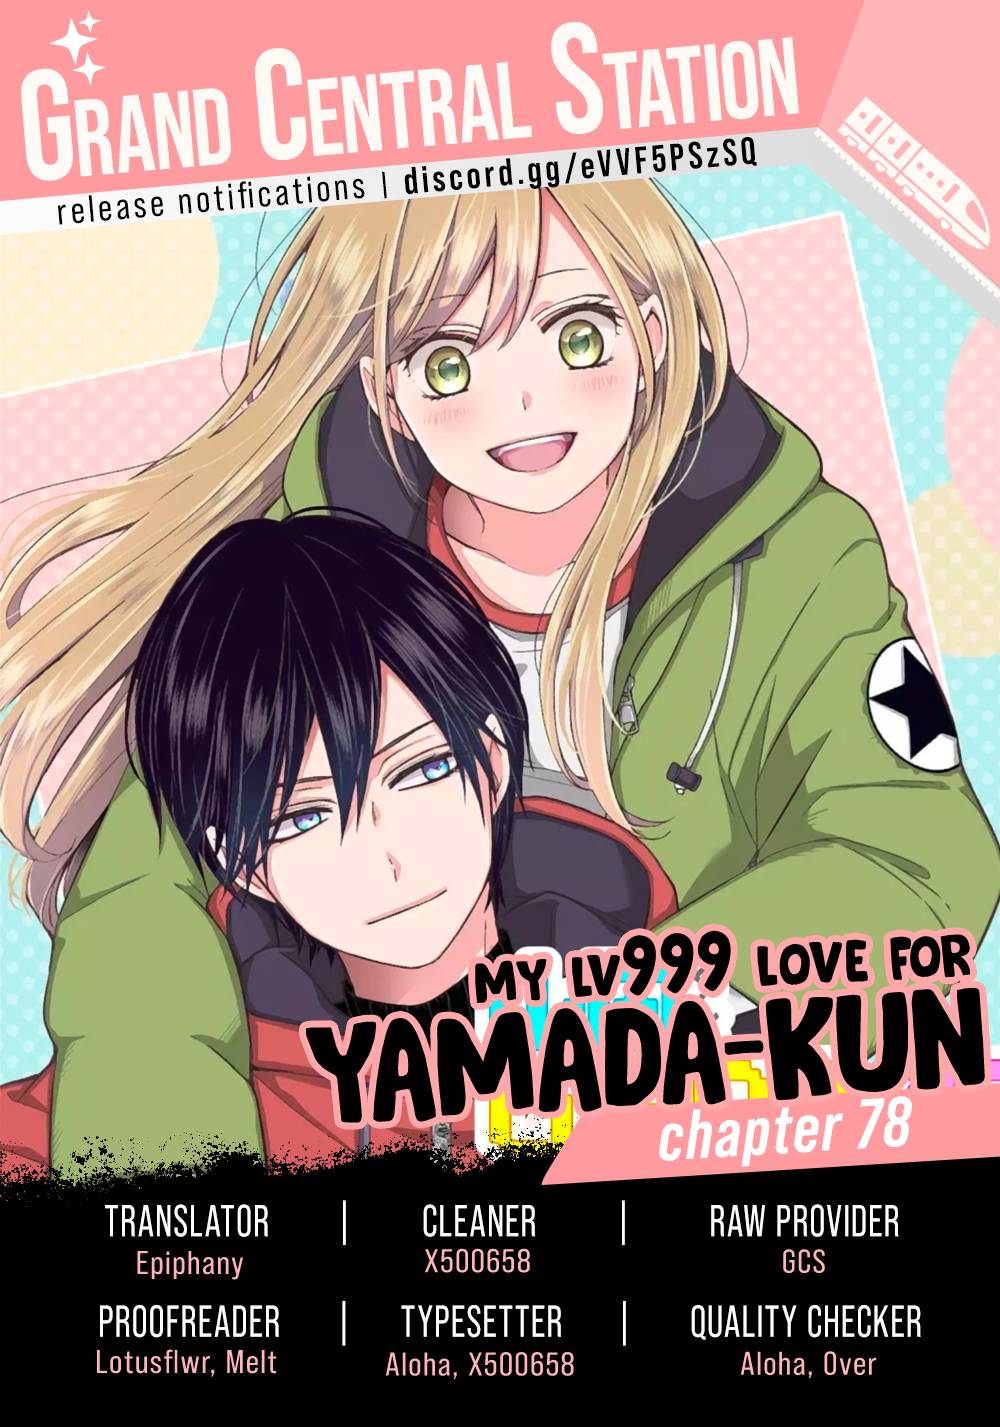 Loving Yamada at Lv999! Chapter 1 (My Love Story with Yamada-kun